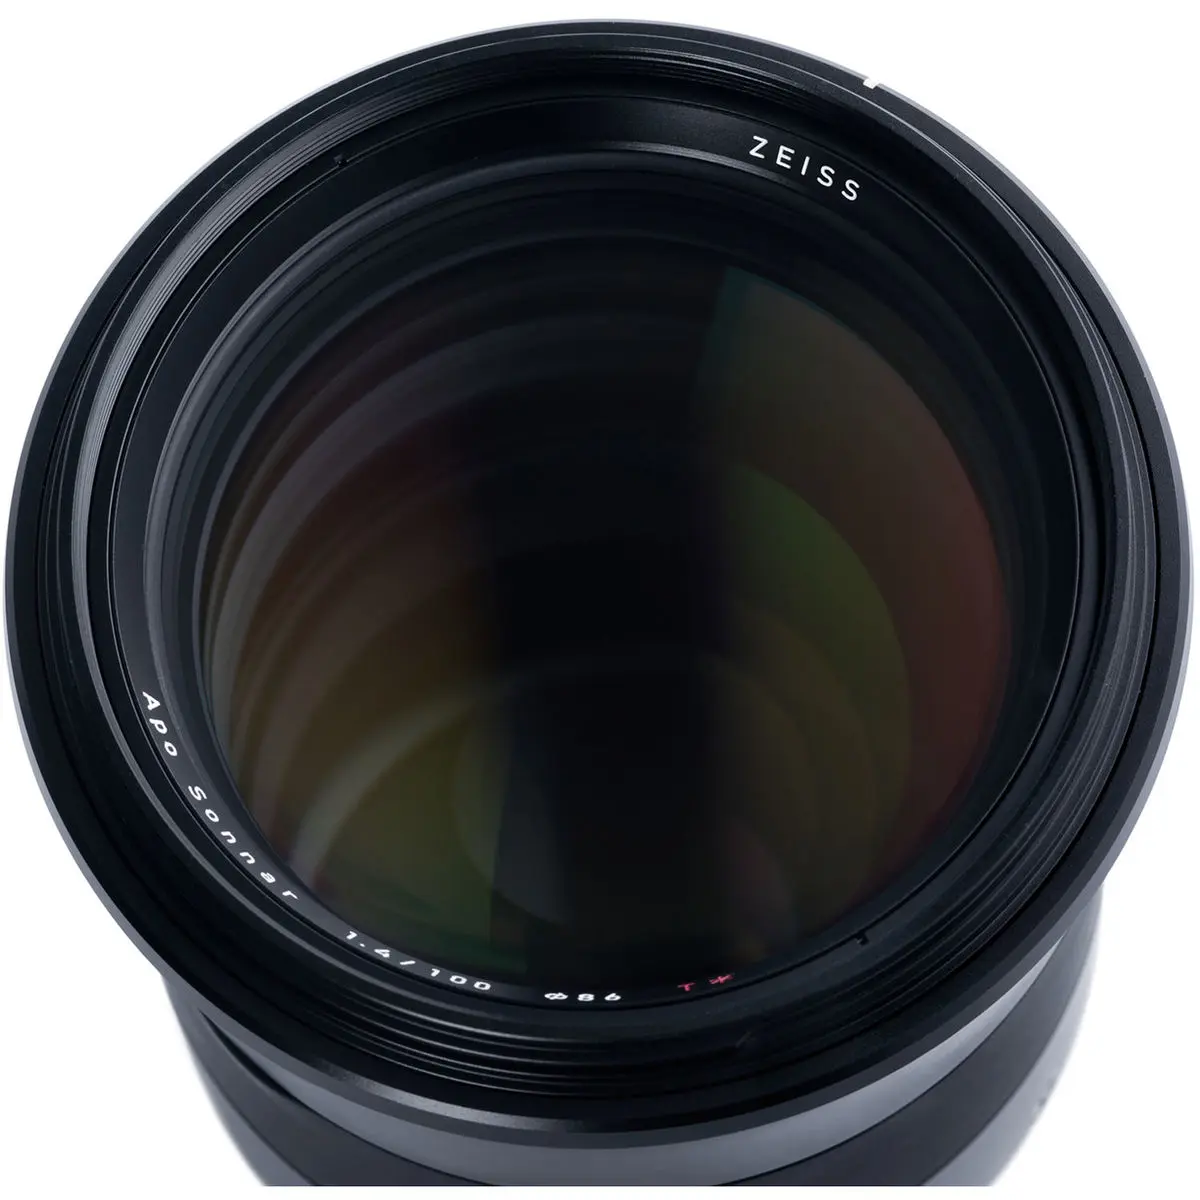 5. Carl Zeiss Otus 1.4/100 ZF.2 (Nikon) Lens